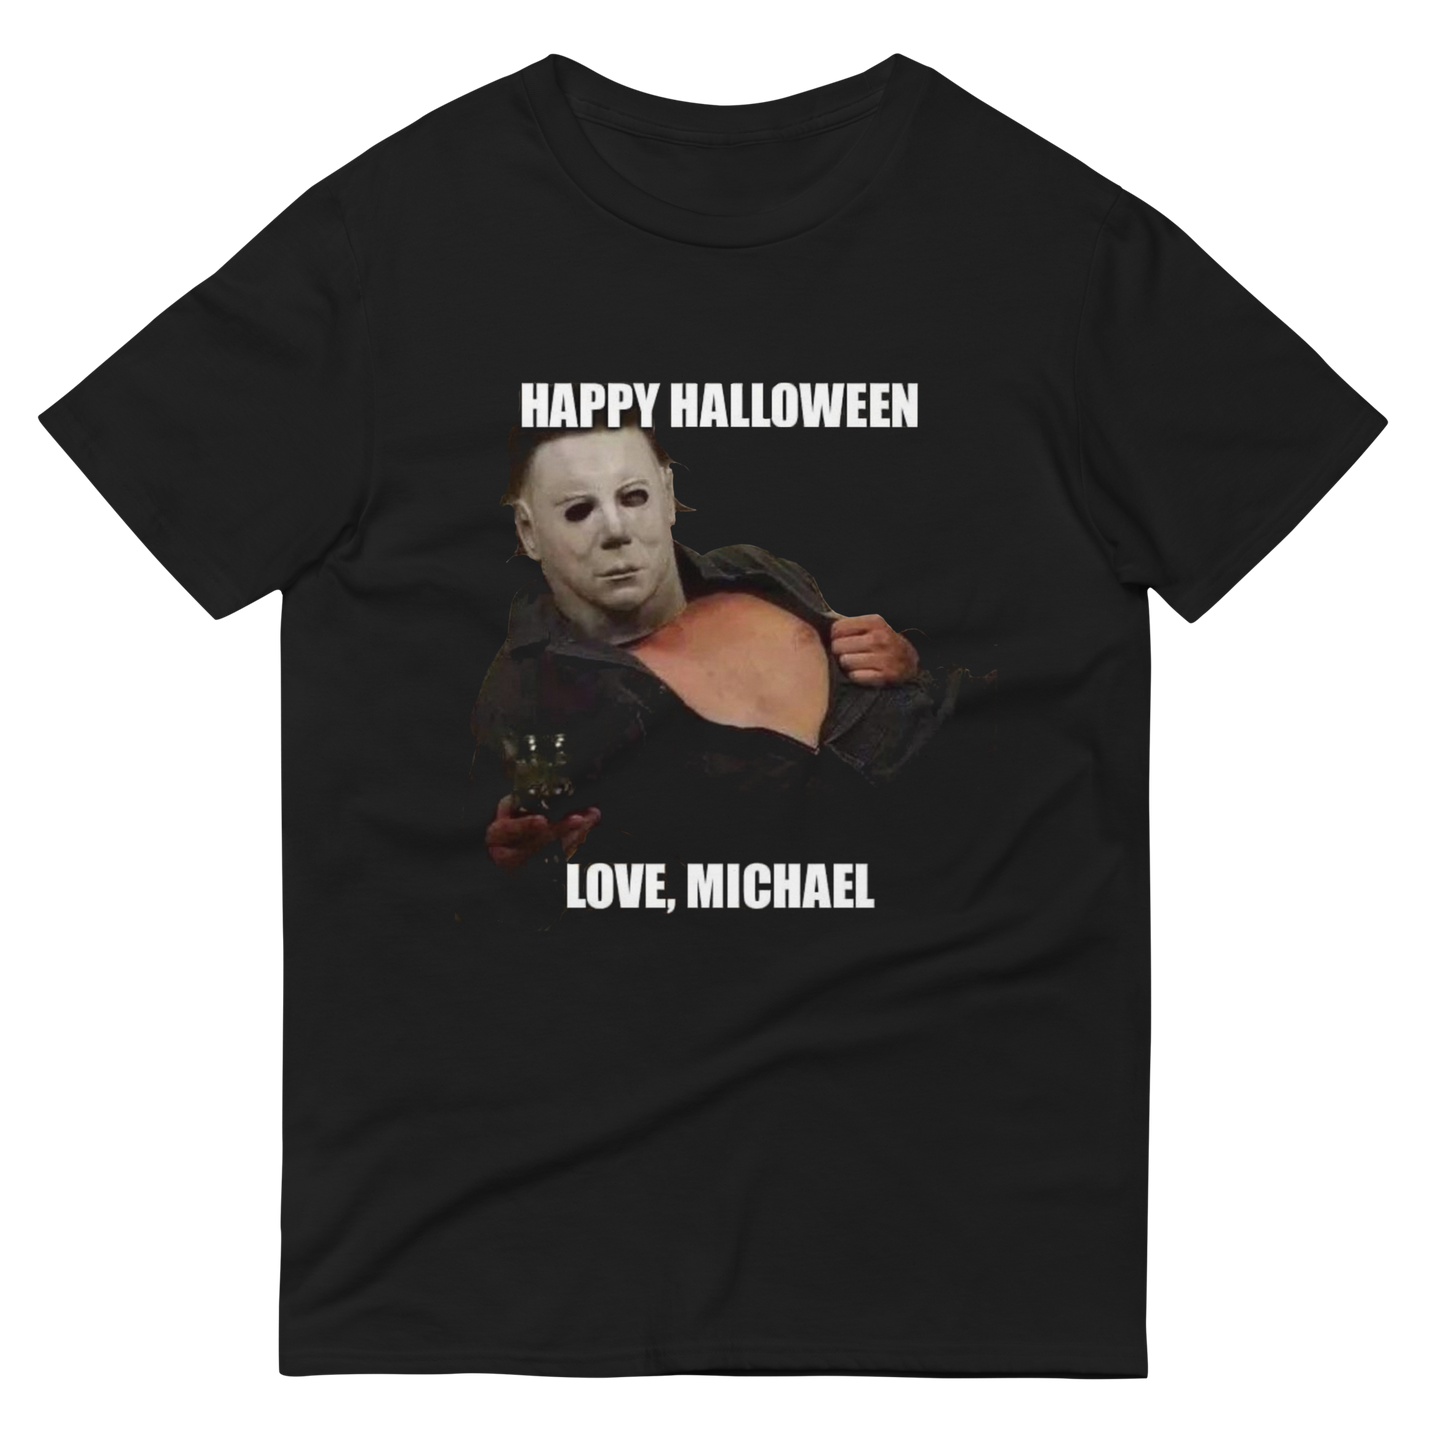 Happy Halloween, Love Michael